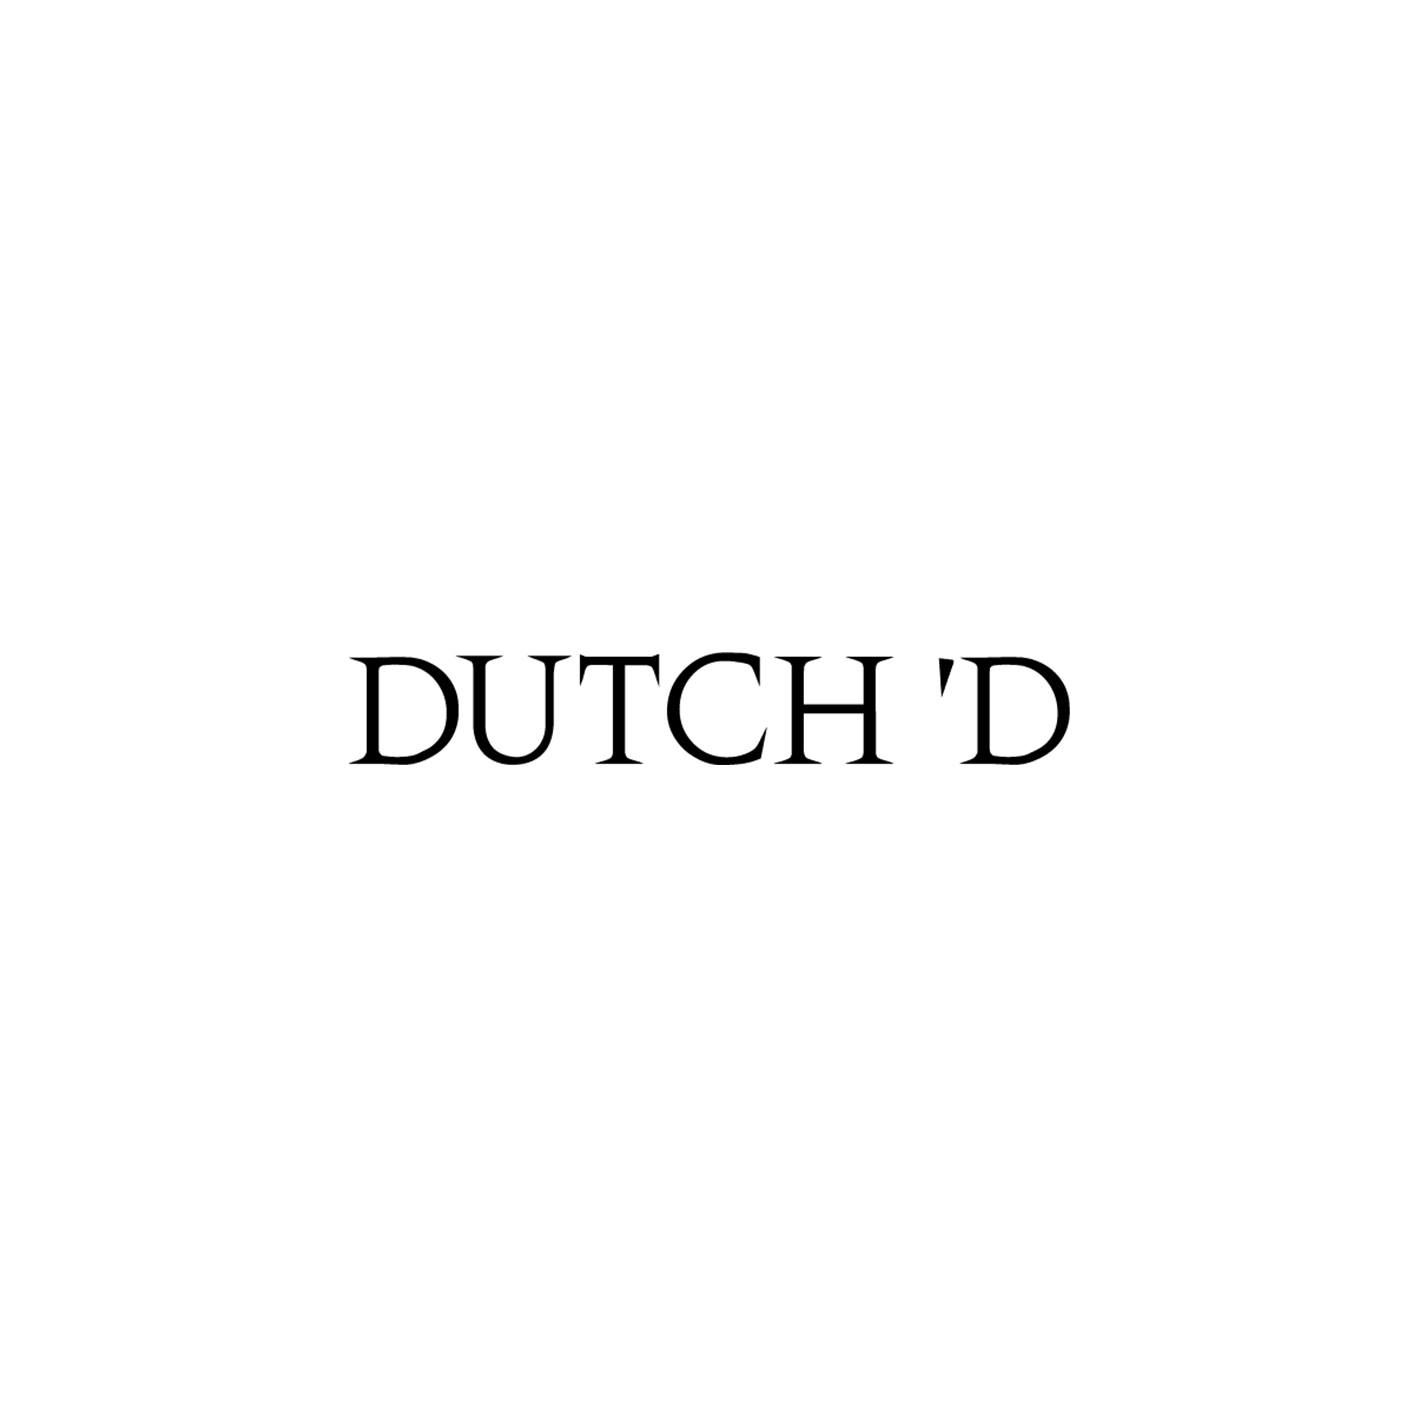 Promo codes Dutch'D